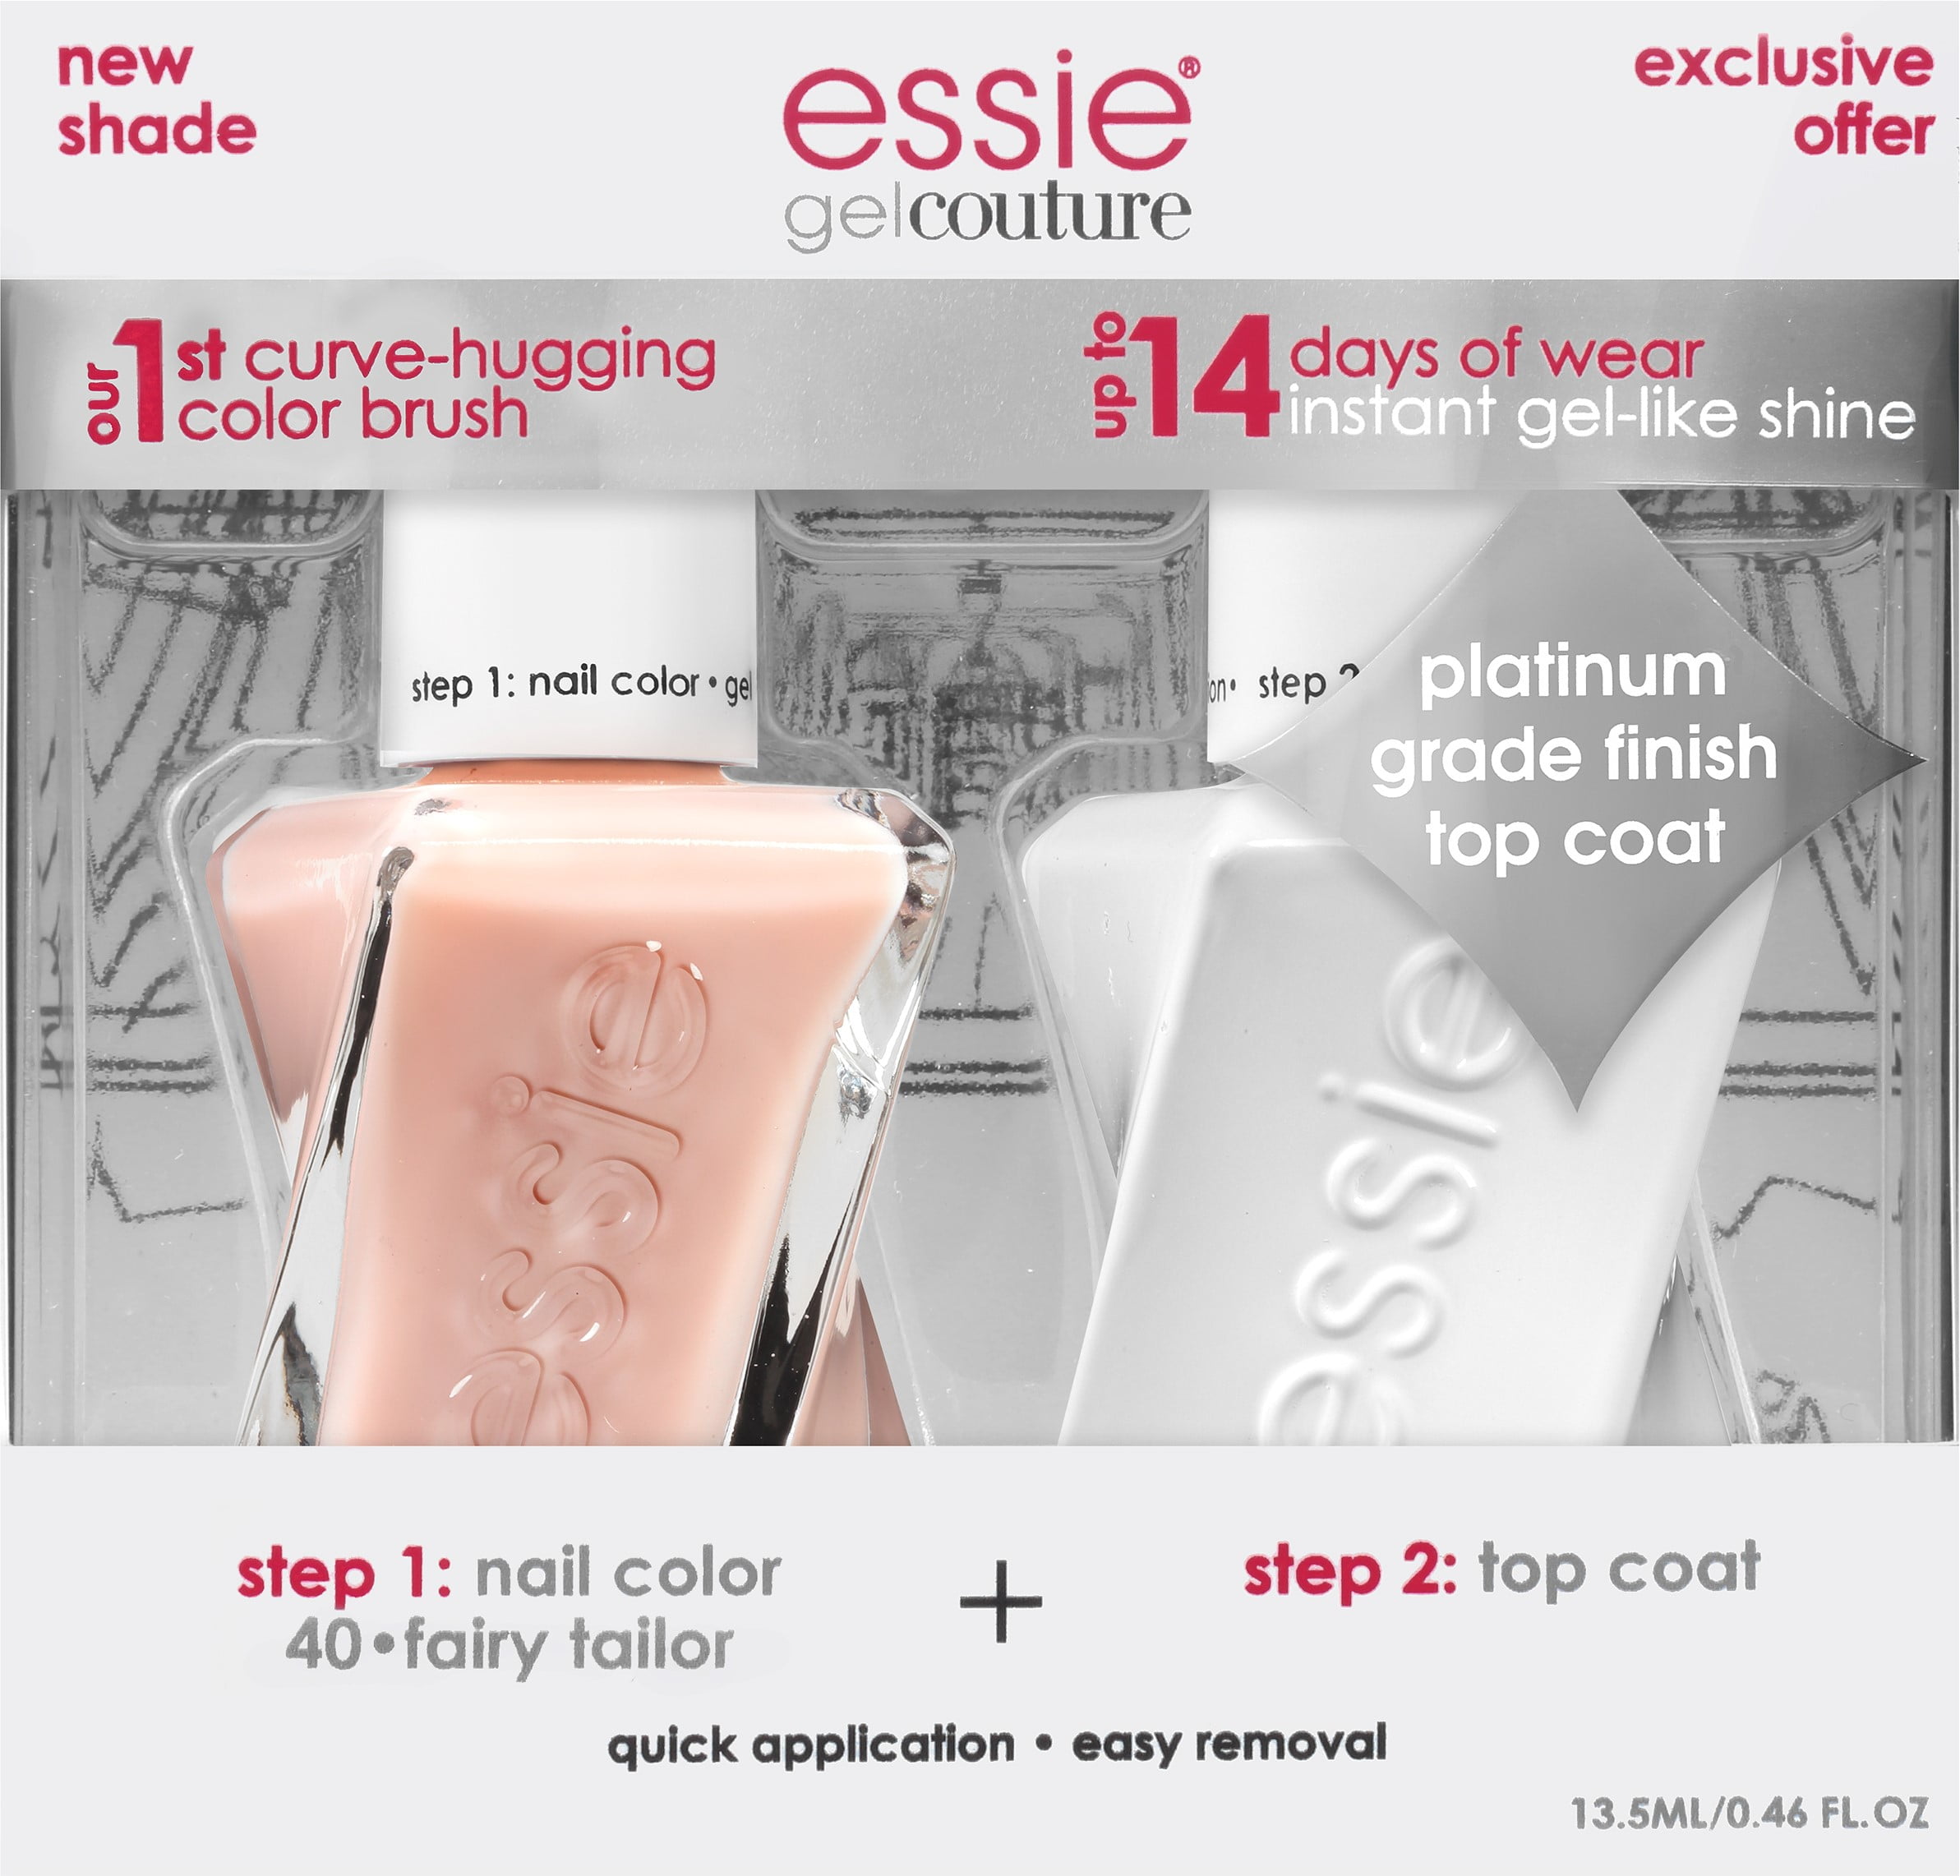 essie gel couture nail polish + top coat kit, fairy tailor + top coat, 1  kit 0.46 oz